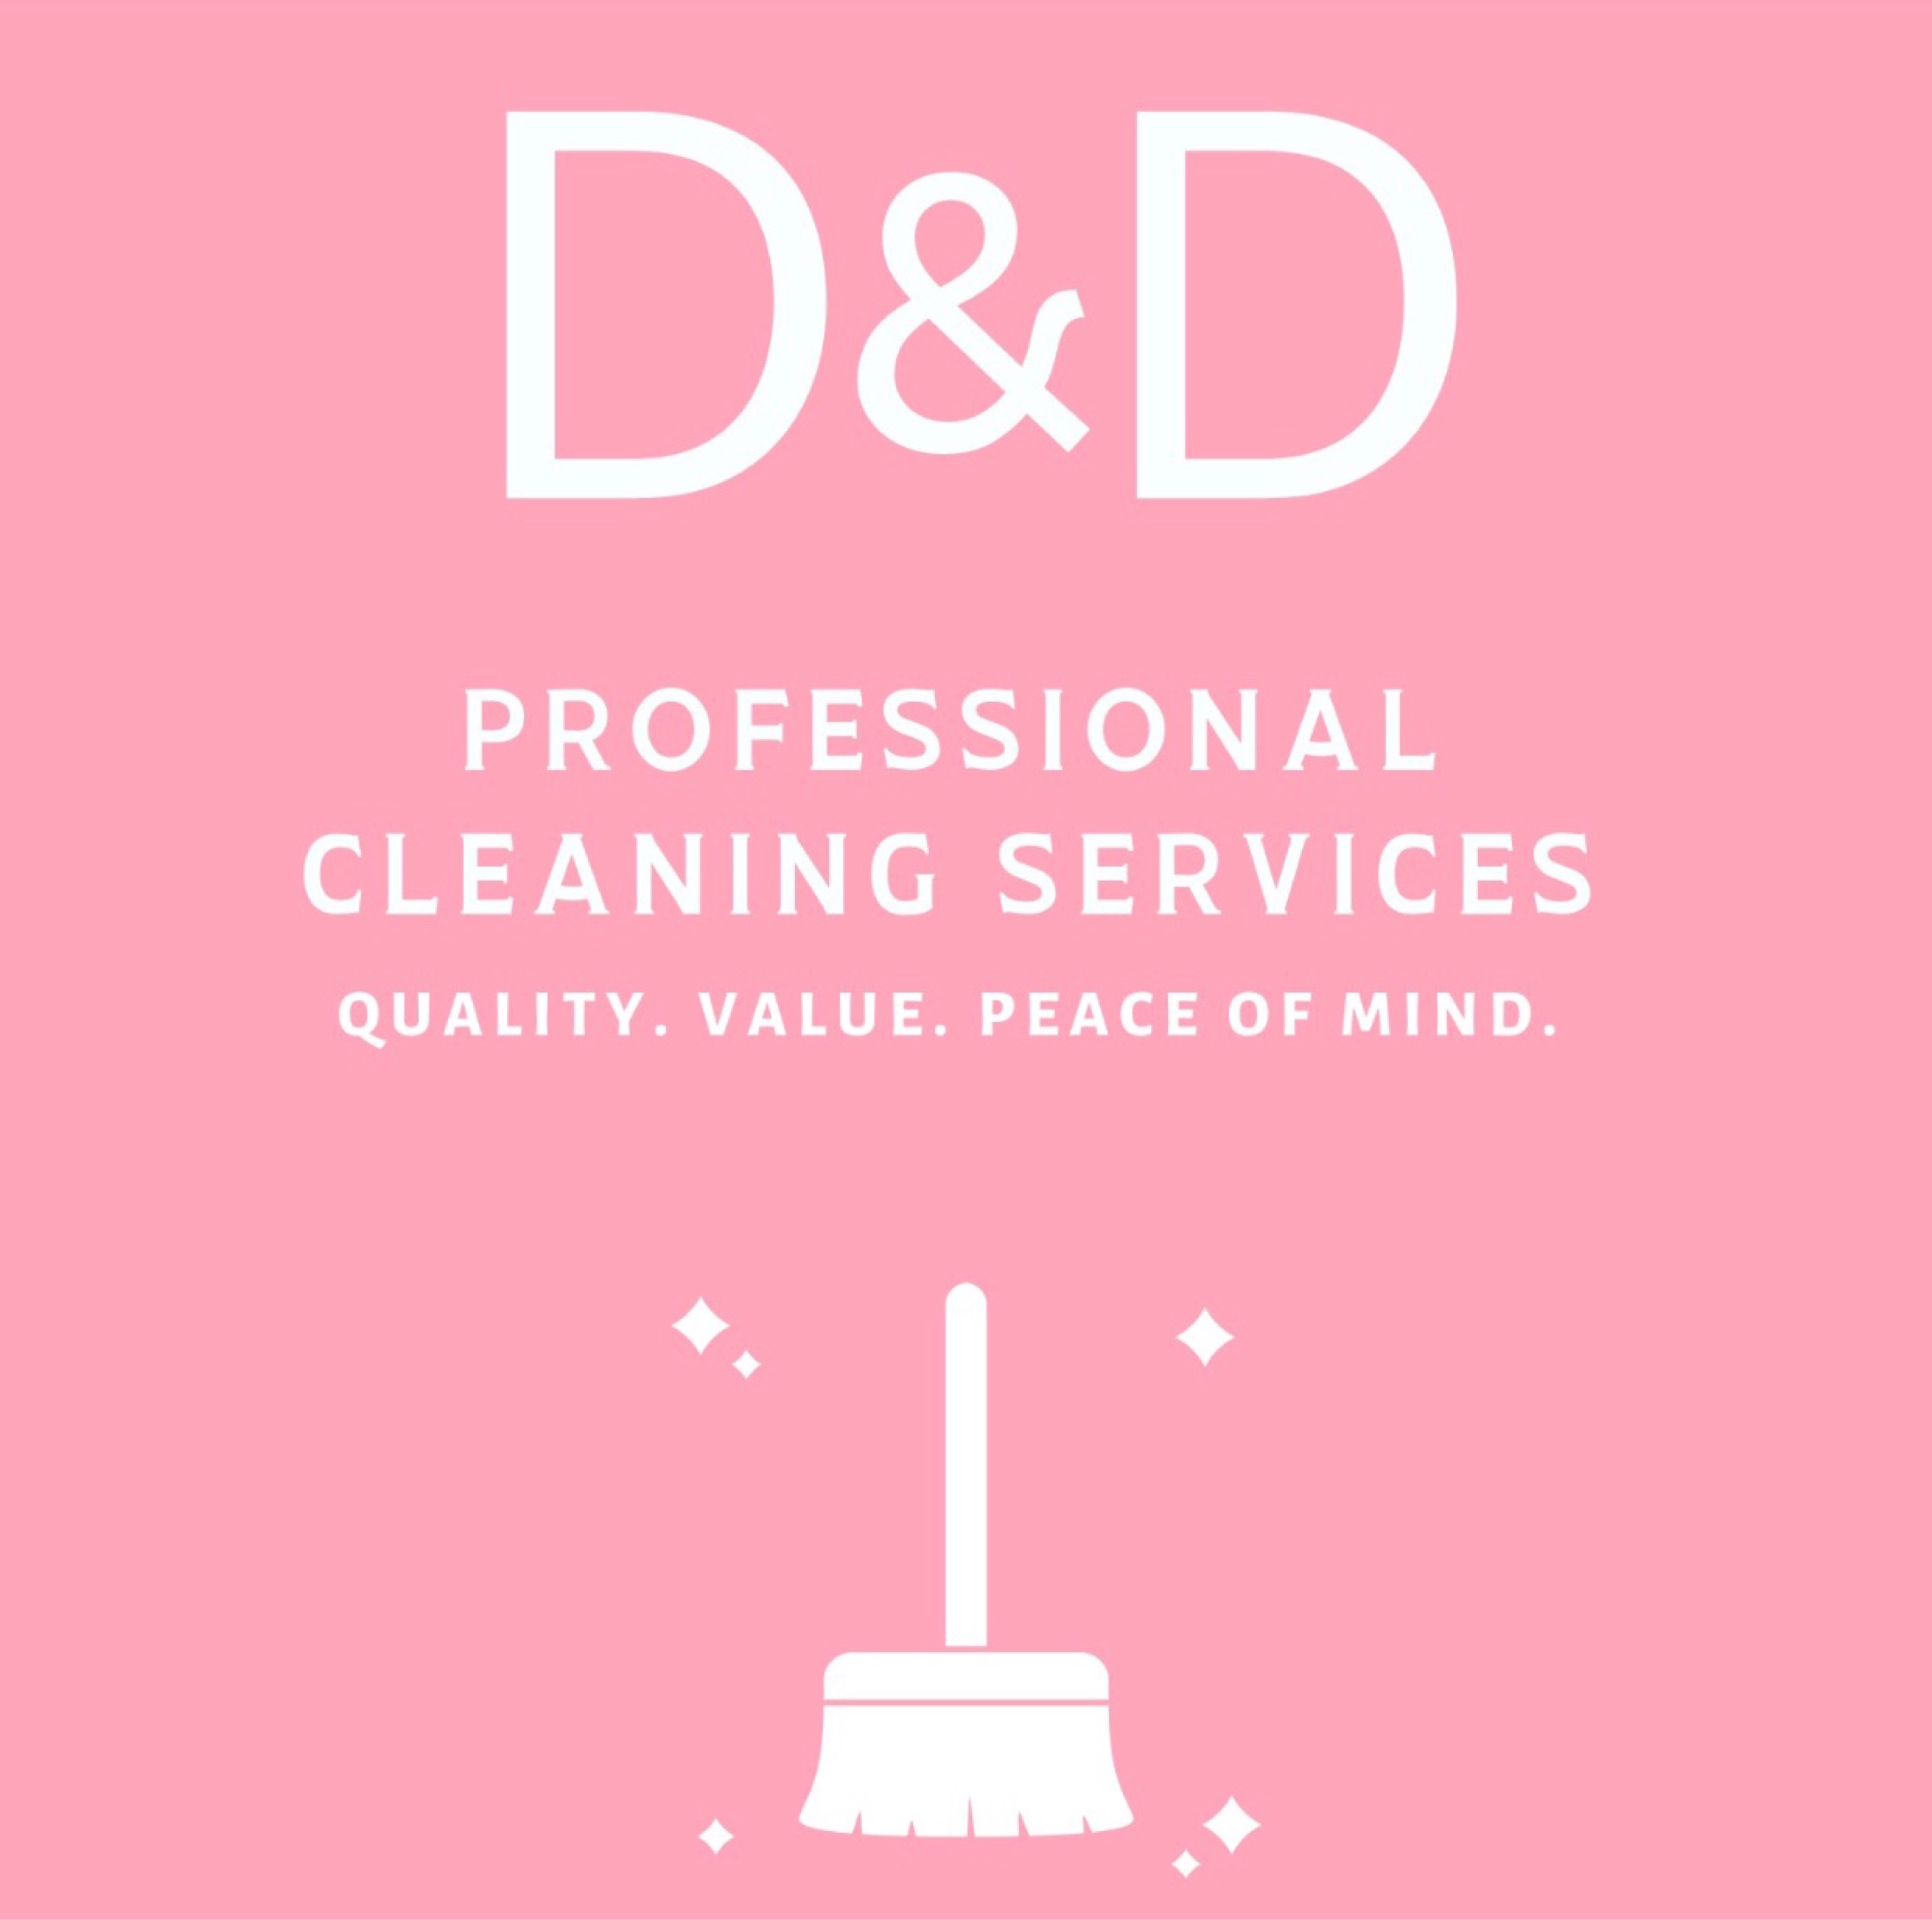 D&D Professional Cleaning Services R&C, LLC Logo